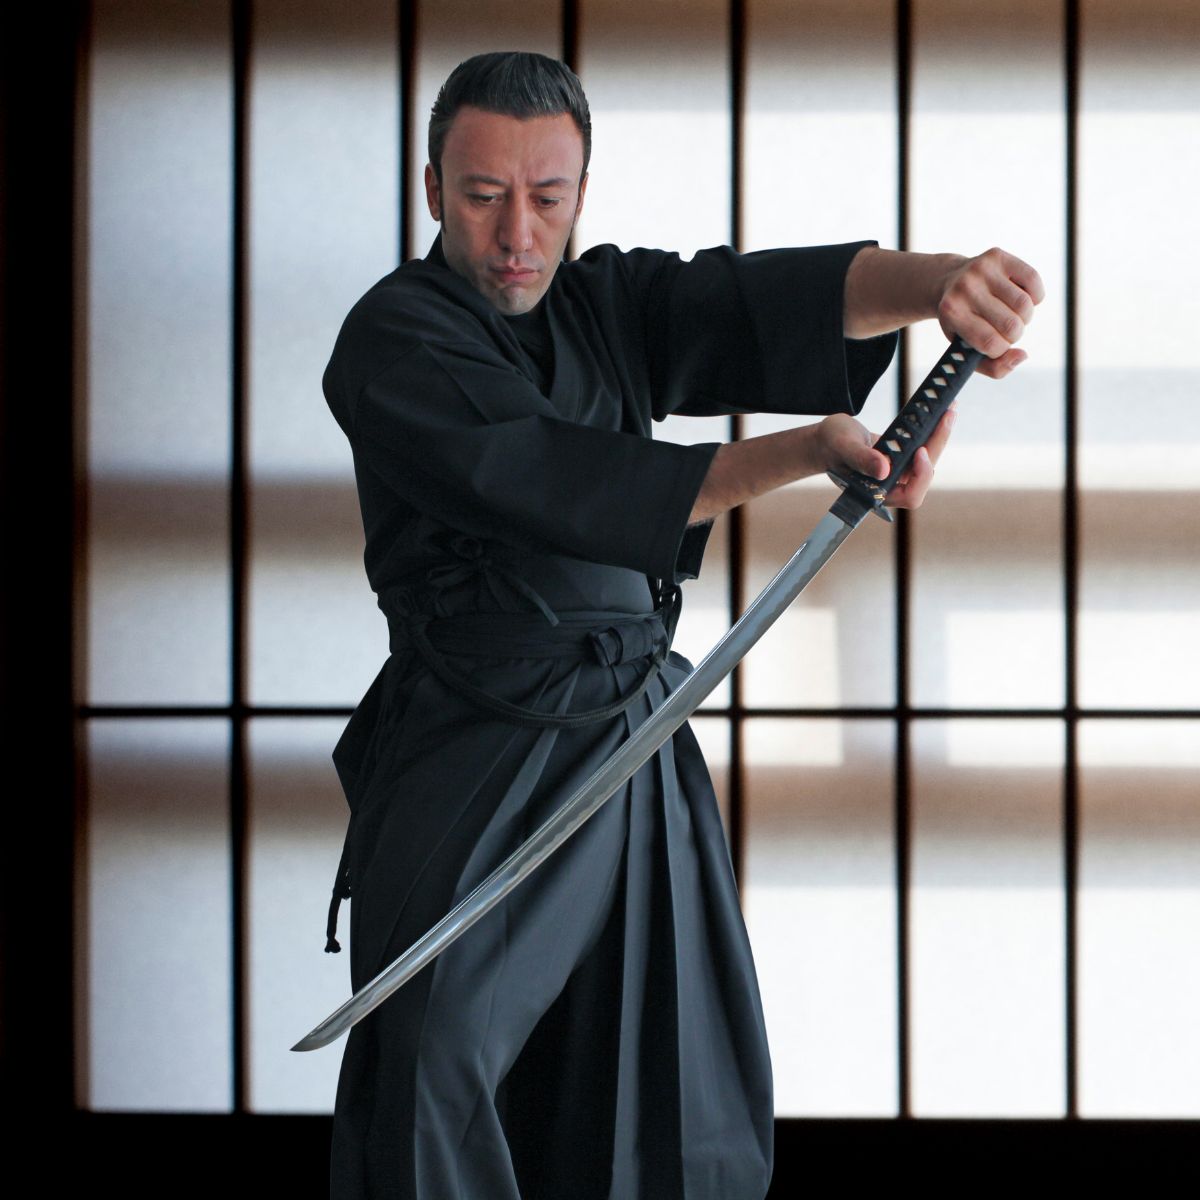 Iaido sword techniques